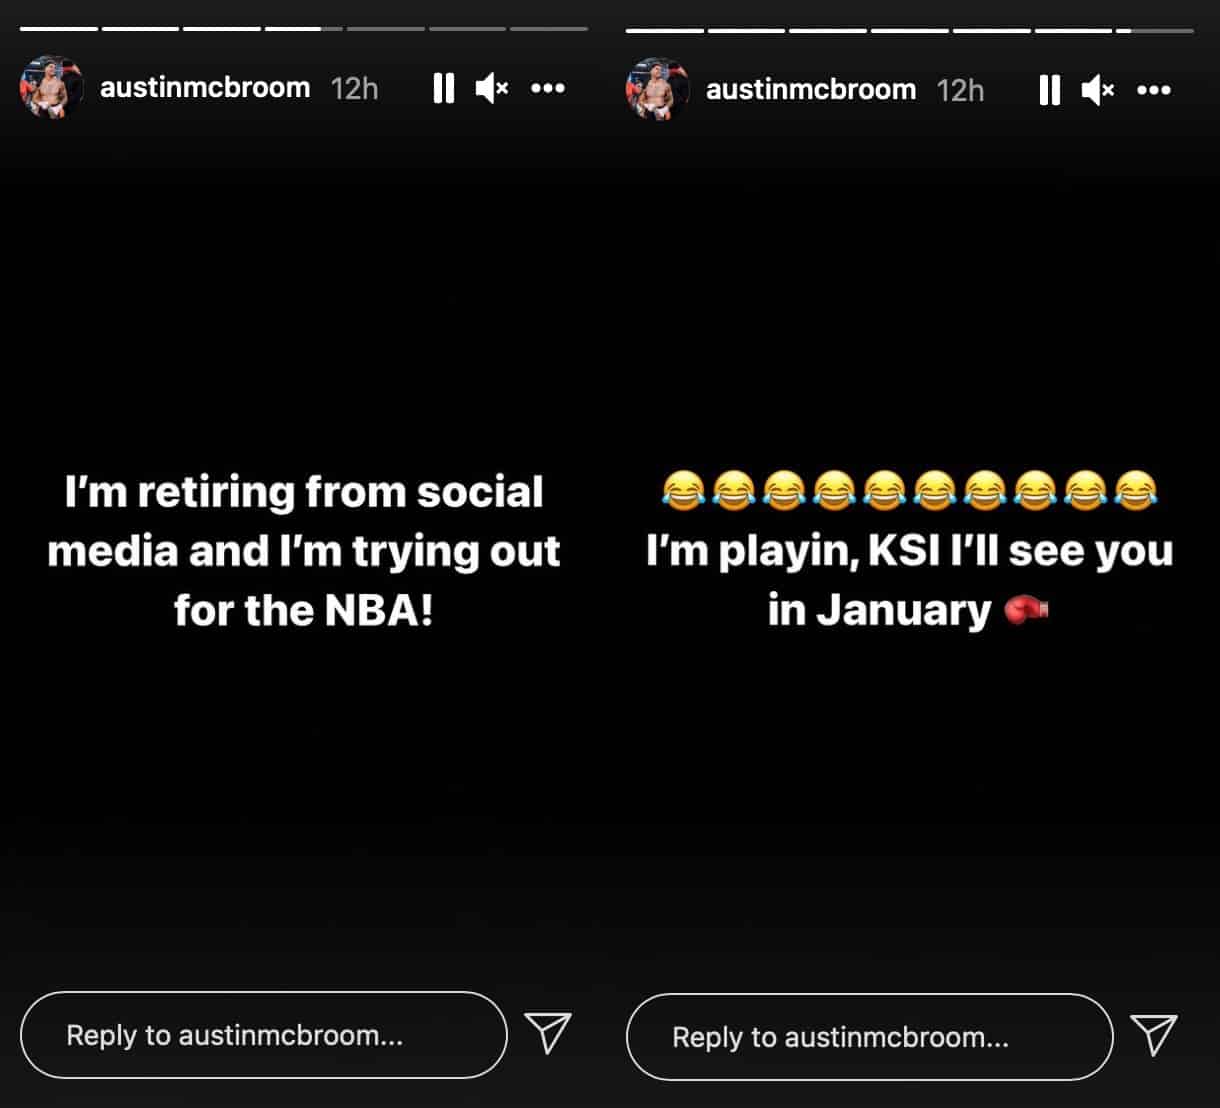 Text on Austin McBroom's Instagram story